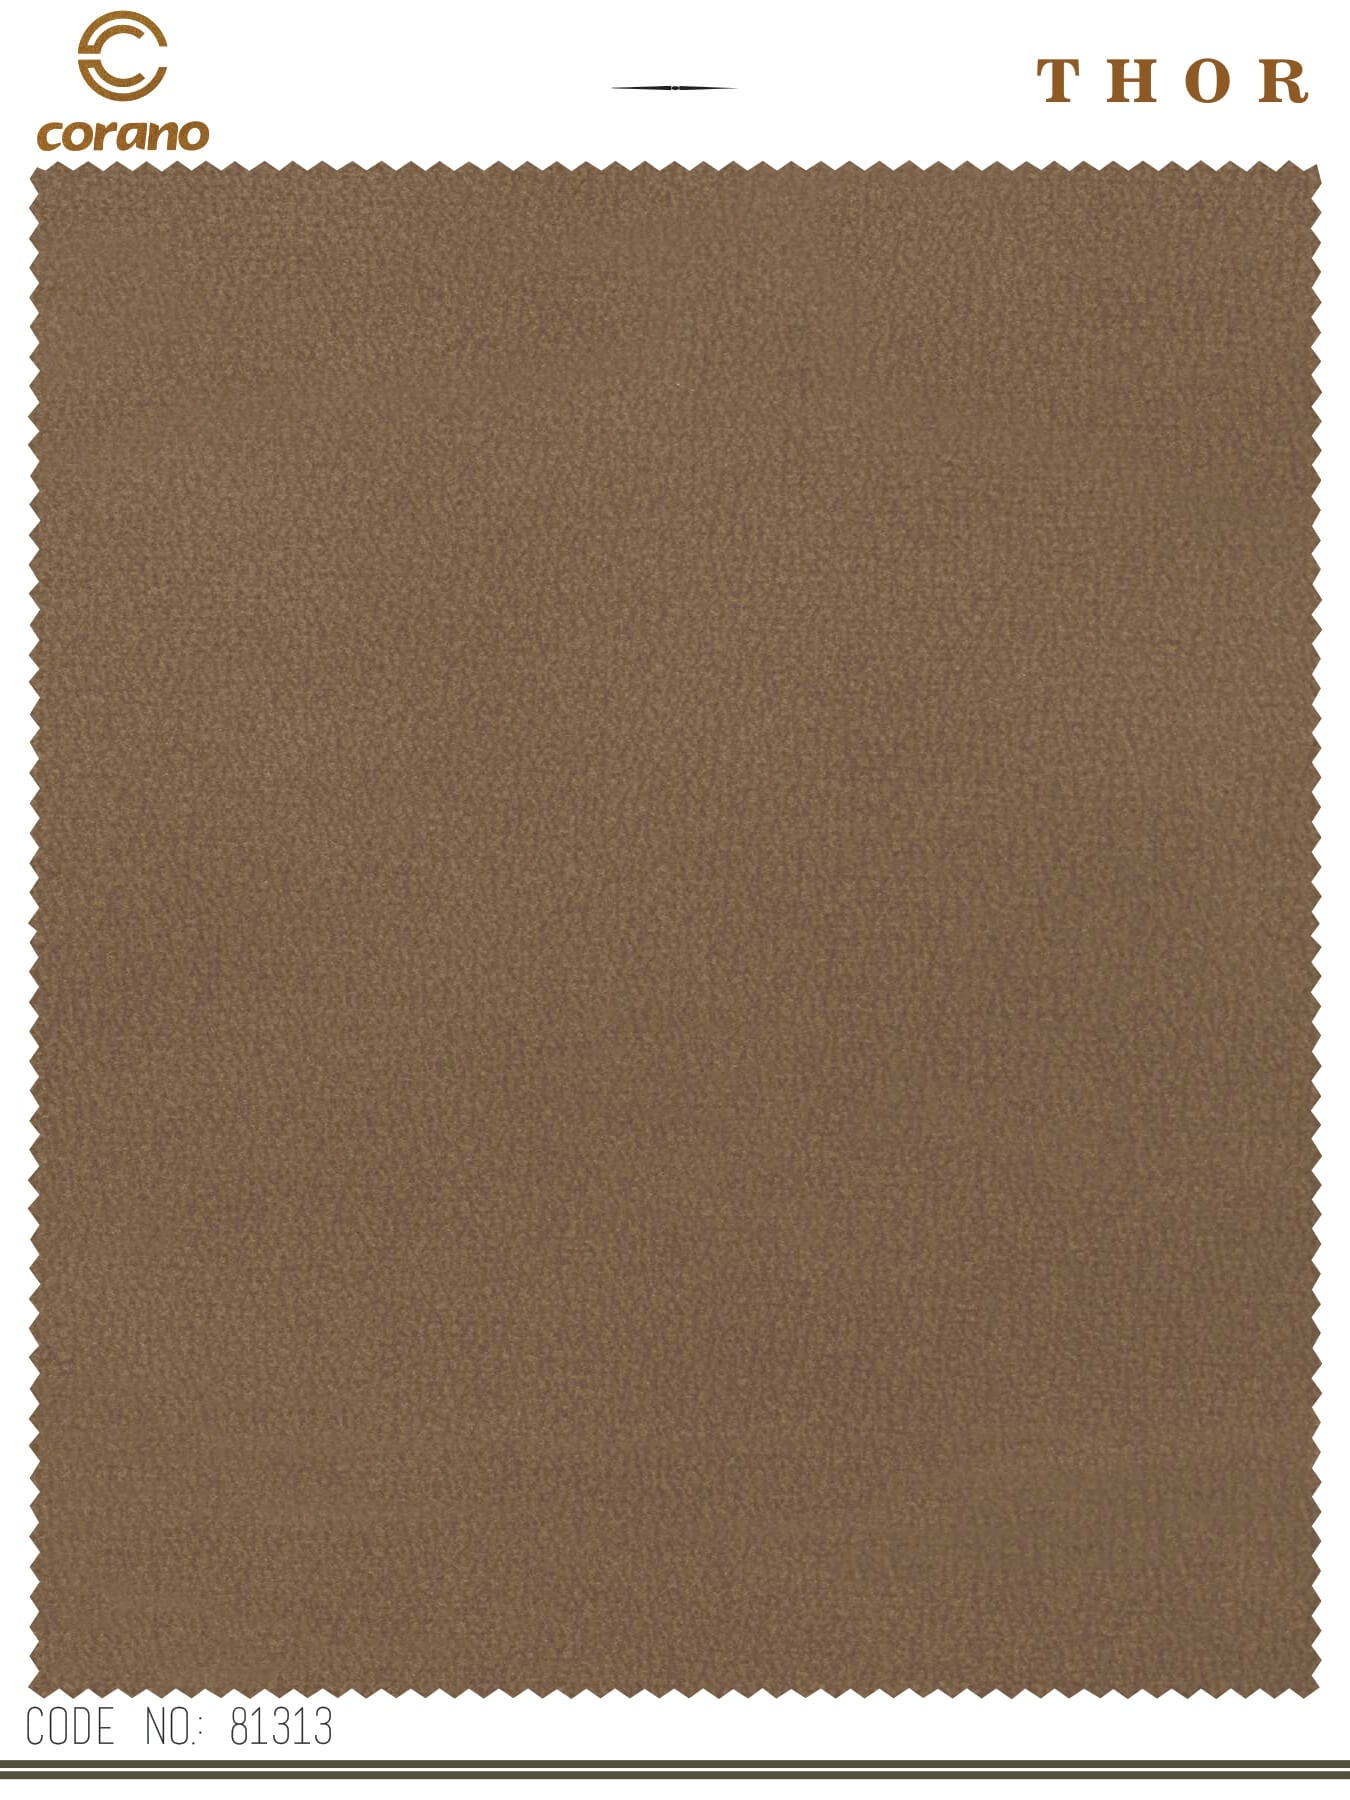 Sofa Fabric Corano Thor 81301